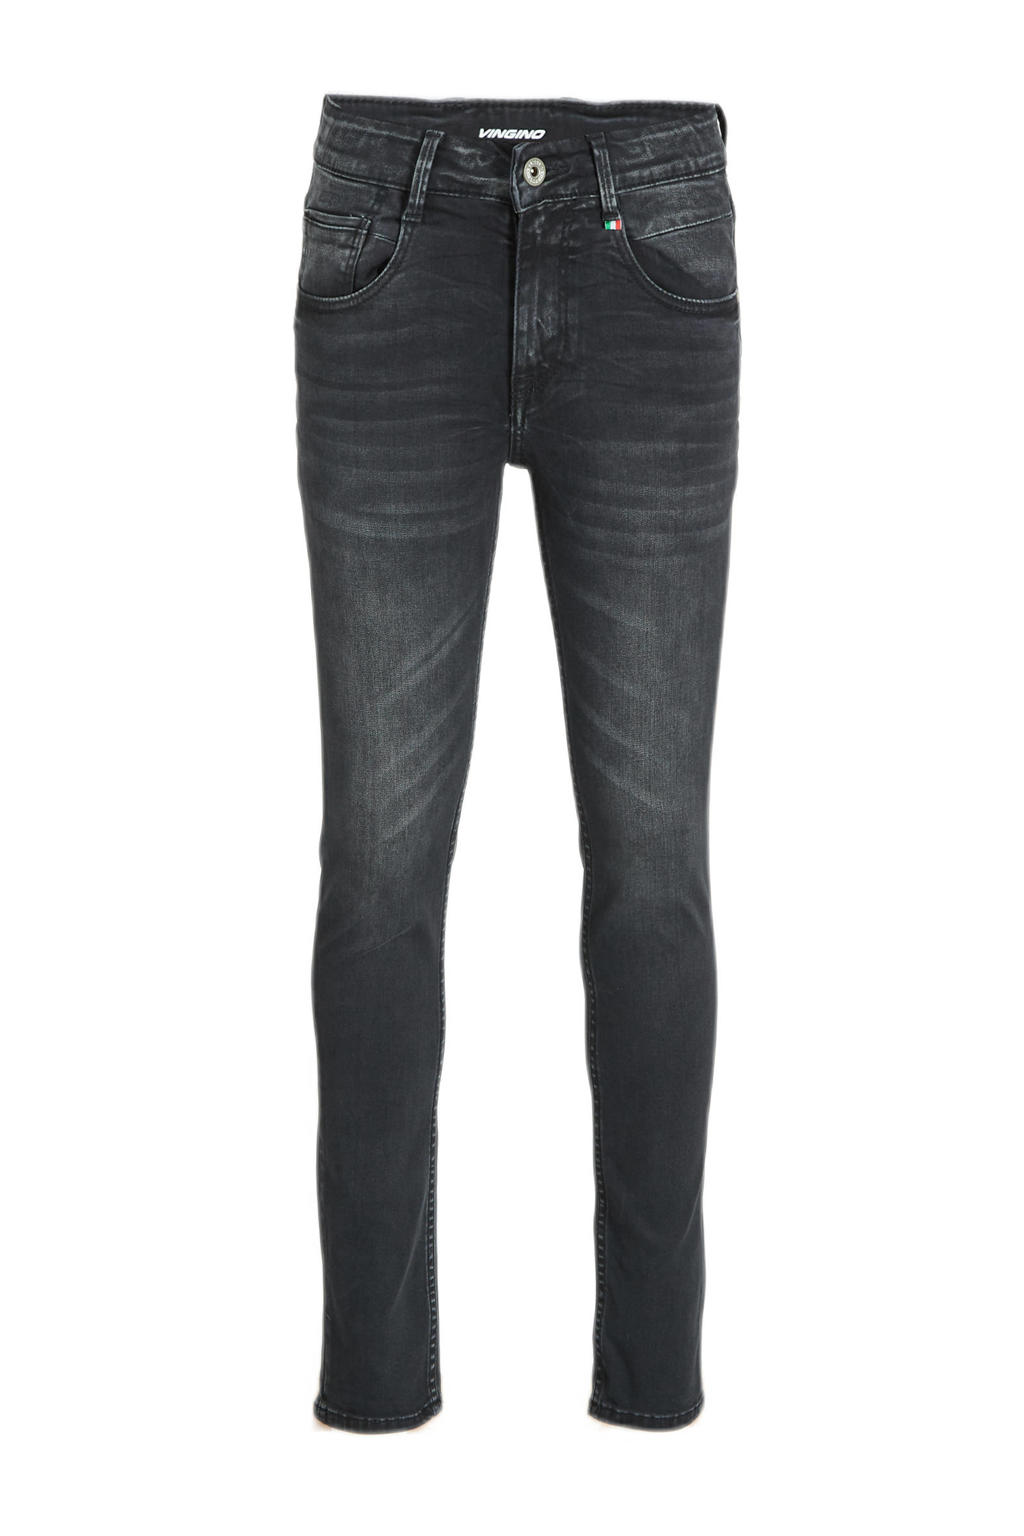 Vingino regular fit jeans Alessandro black vintage